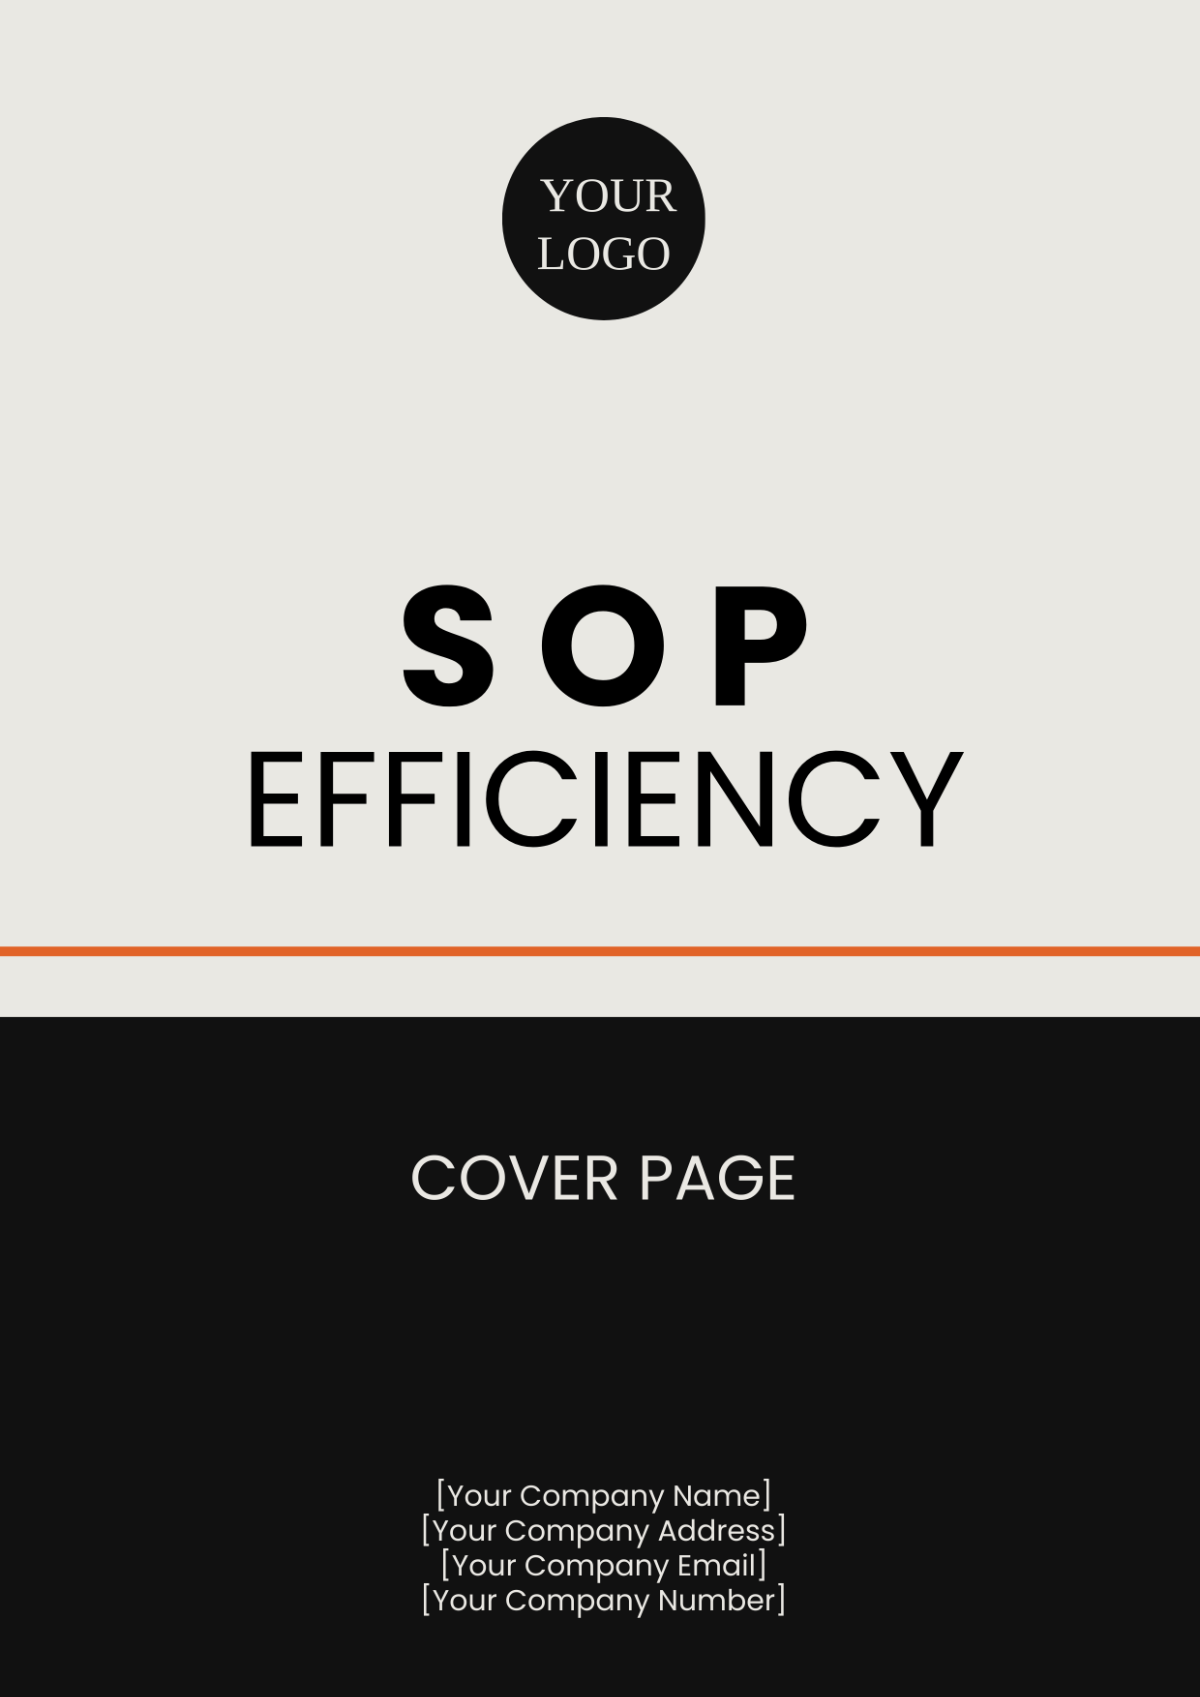 SOP Efficiency Cover Page